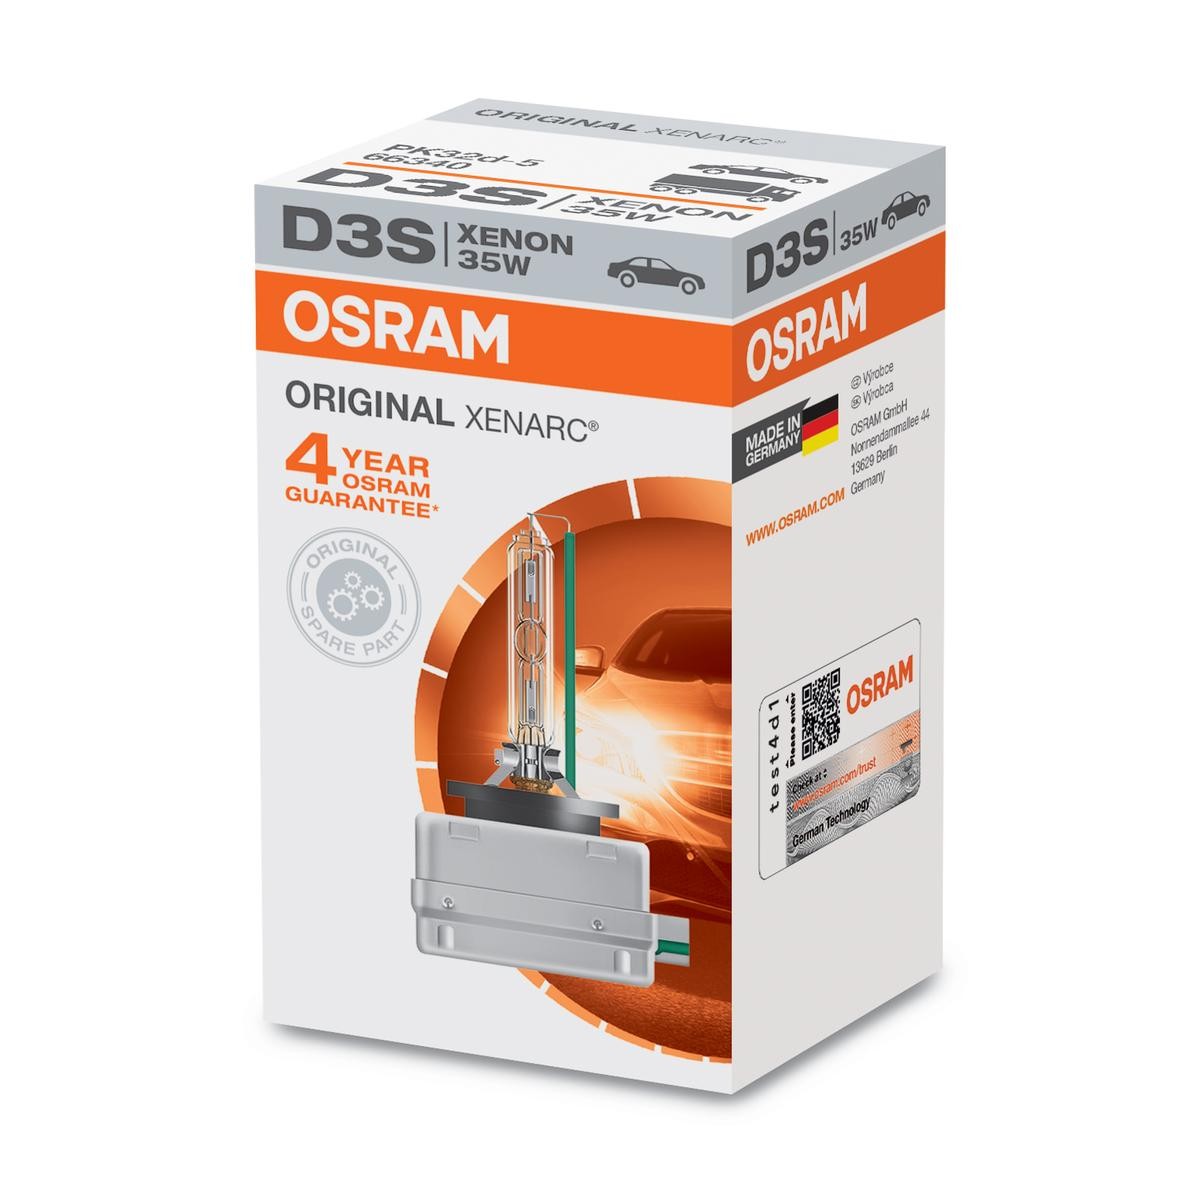 66340 OSRAM XENARC ORIGINAL D3S 42V 35W PK32d-5, 4100K, Xenon Glühlampe,  Fernscheinwerfer